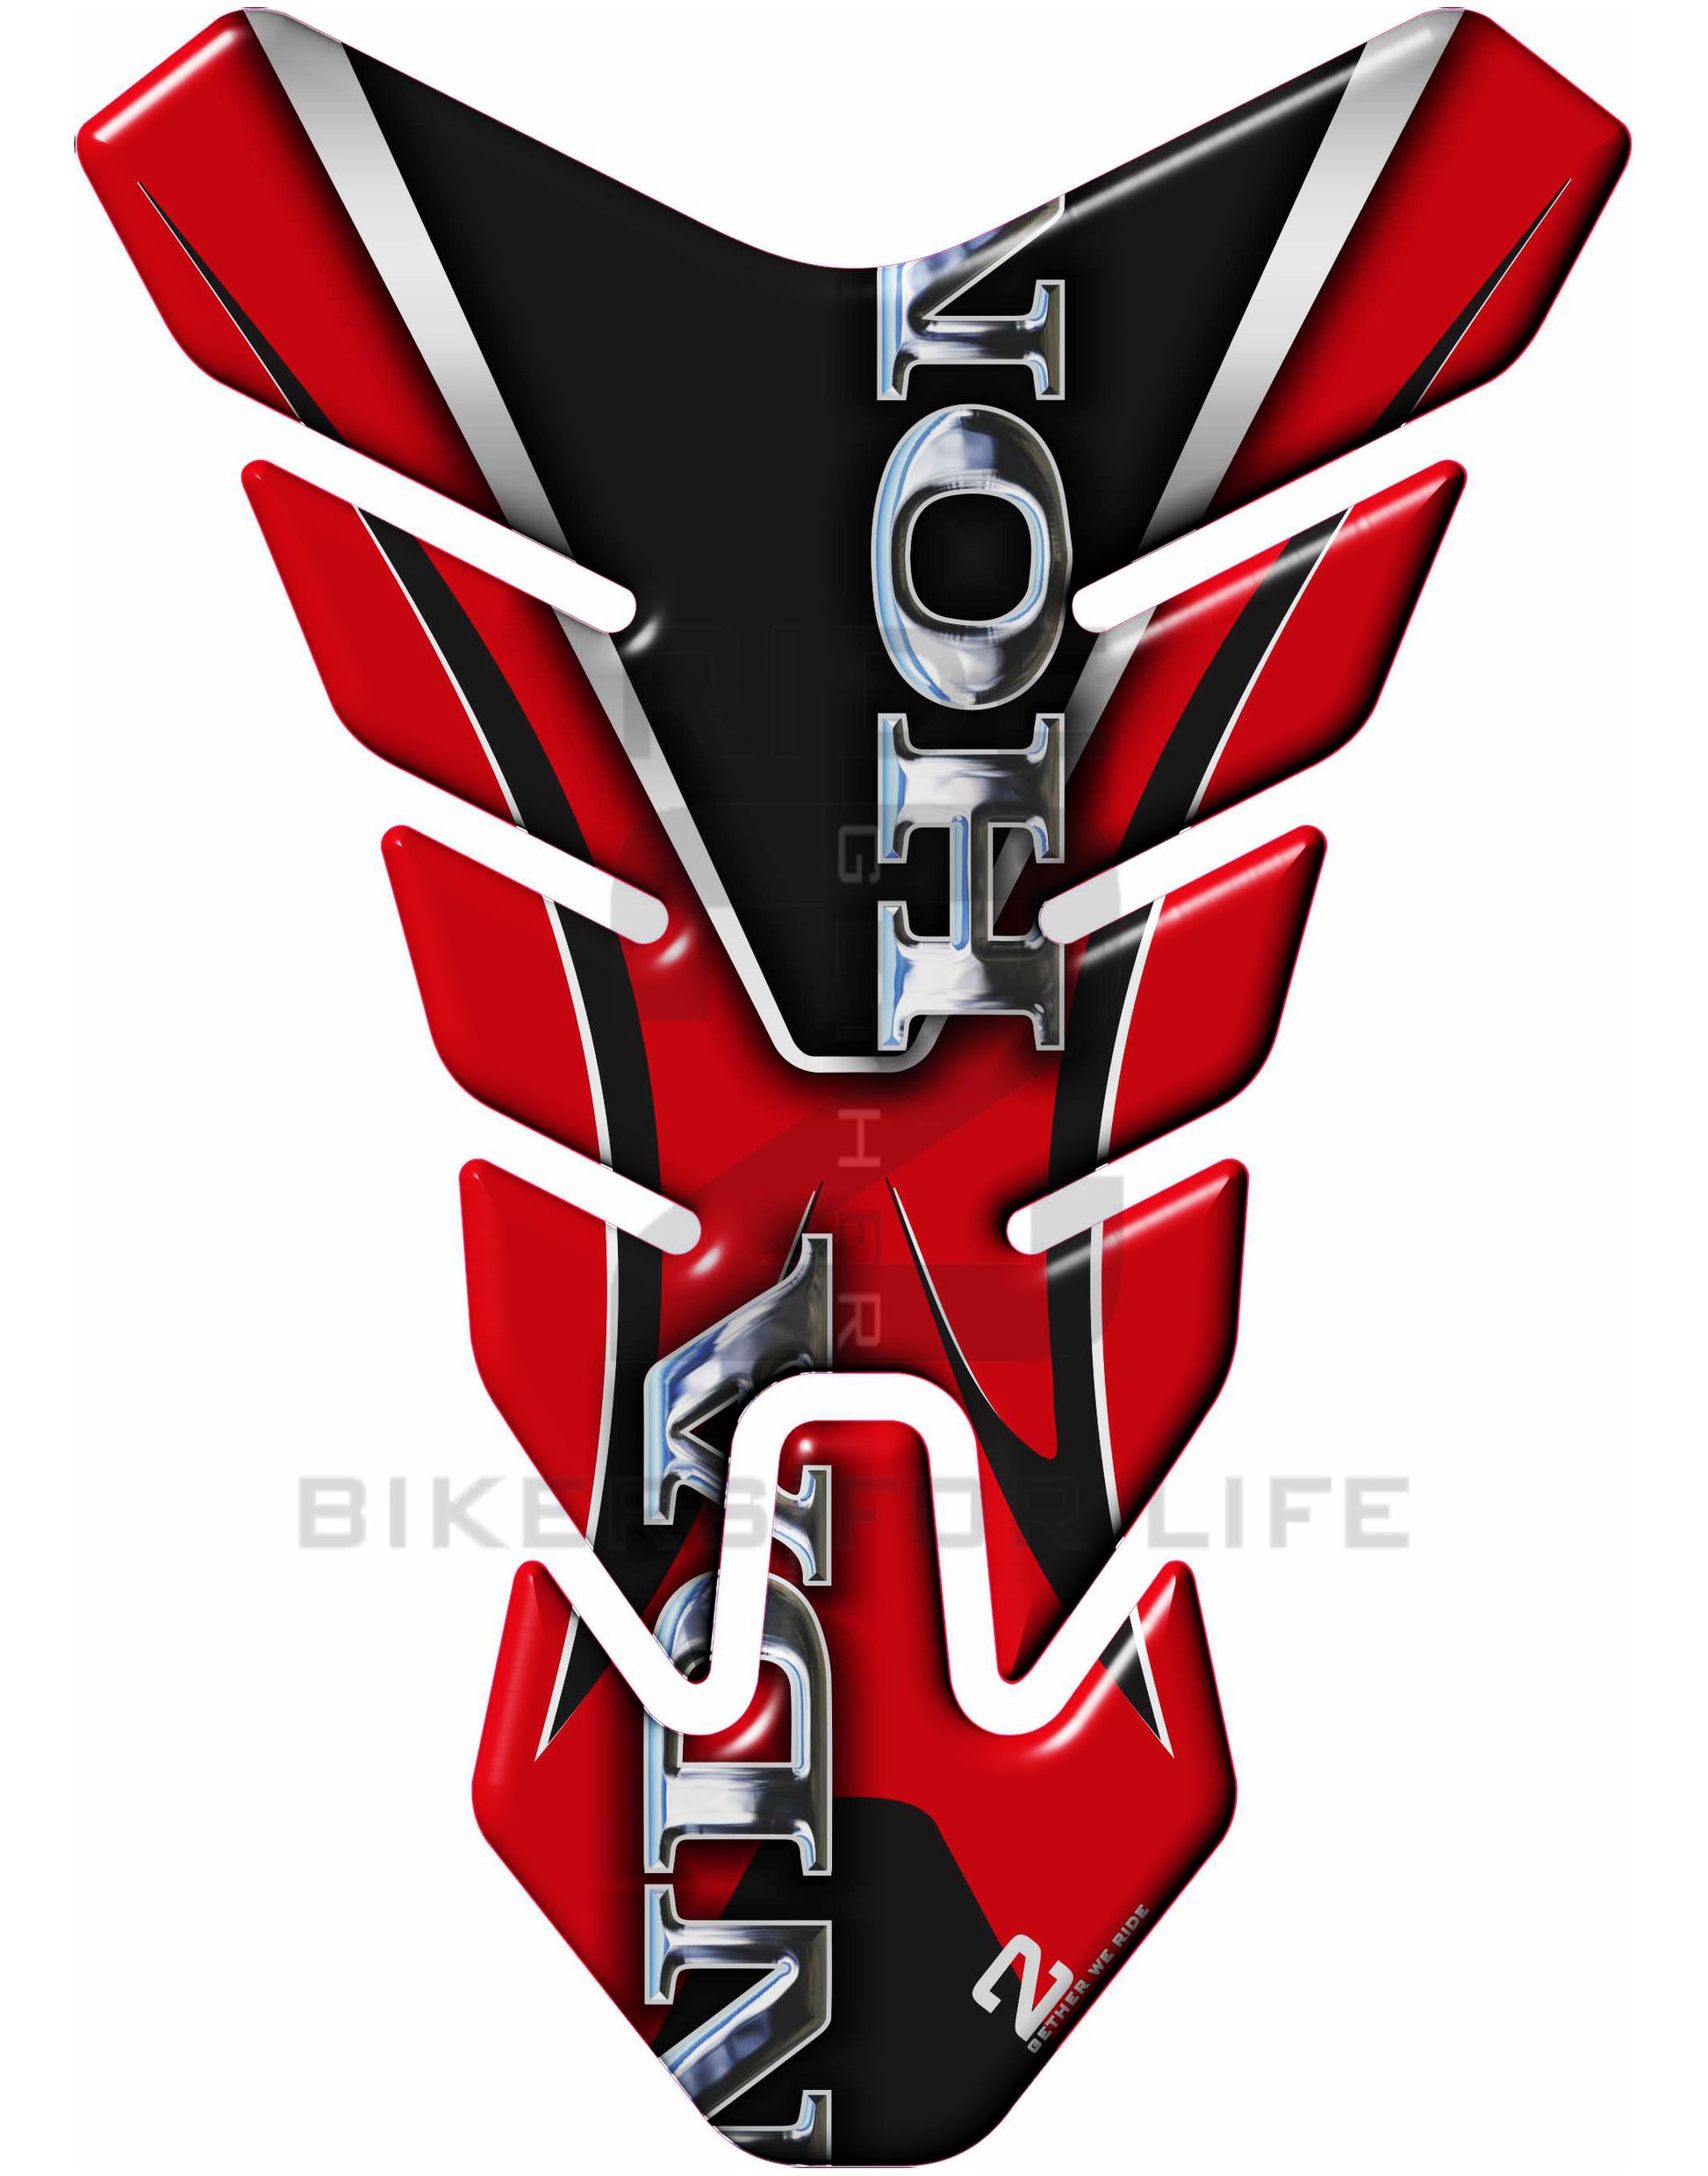 Motor Bike Tank Pad- Honda CBR, NC Series, CB Series, Twin Africa - Red and Black Protective Tank Pad. Universal Fit.